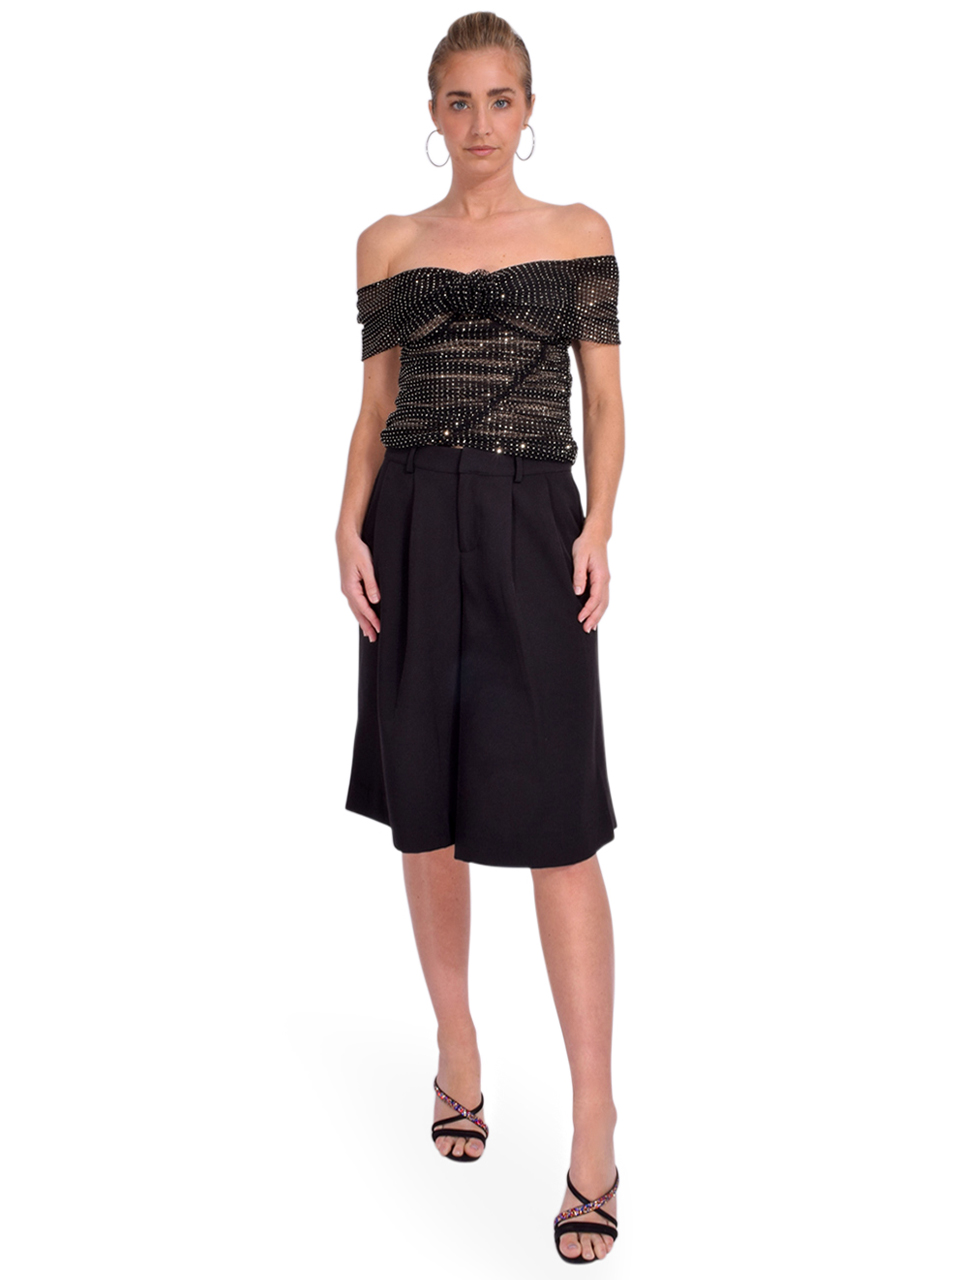 SELF-PORTRAIT Rhinestone Fishnet Top in Black Full Outfit 

